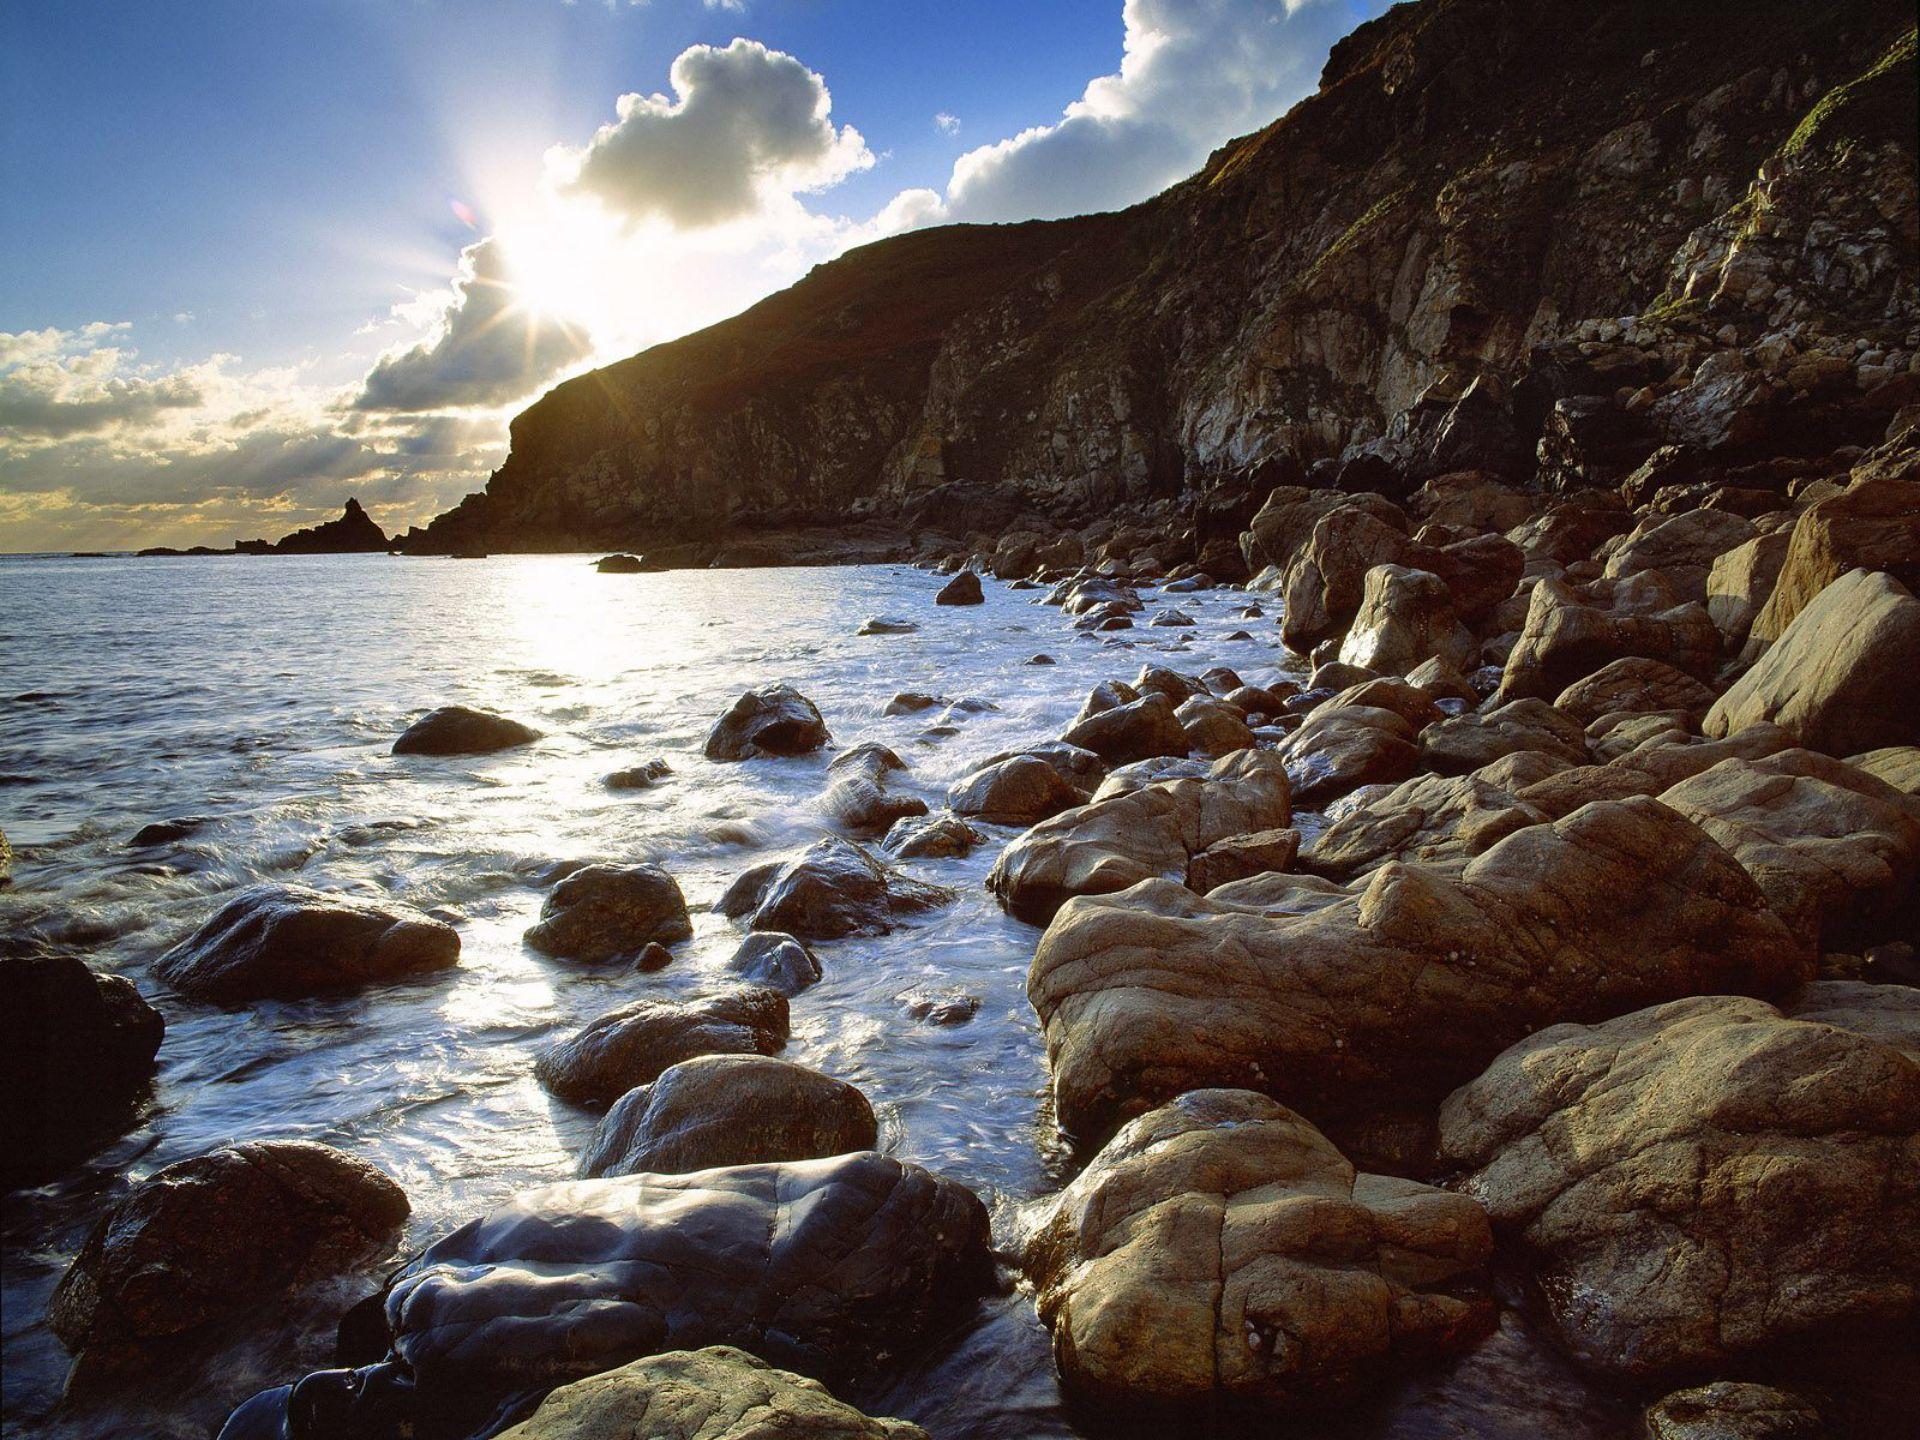 Channel Islands National Park widescreen wallpaper. Wide